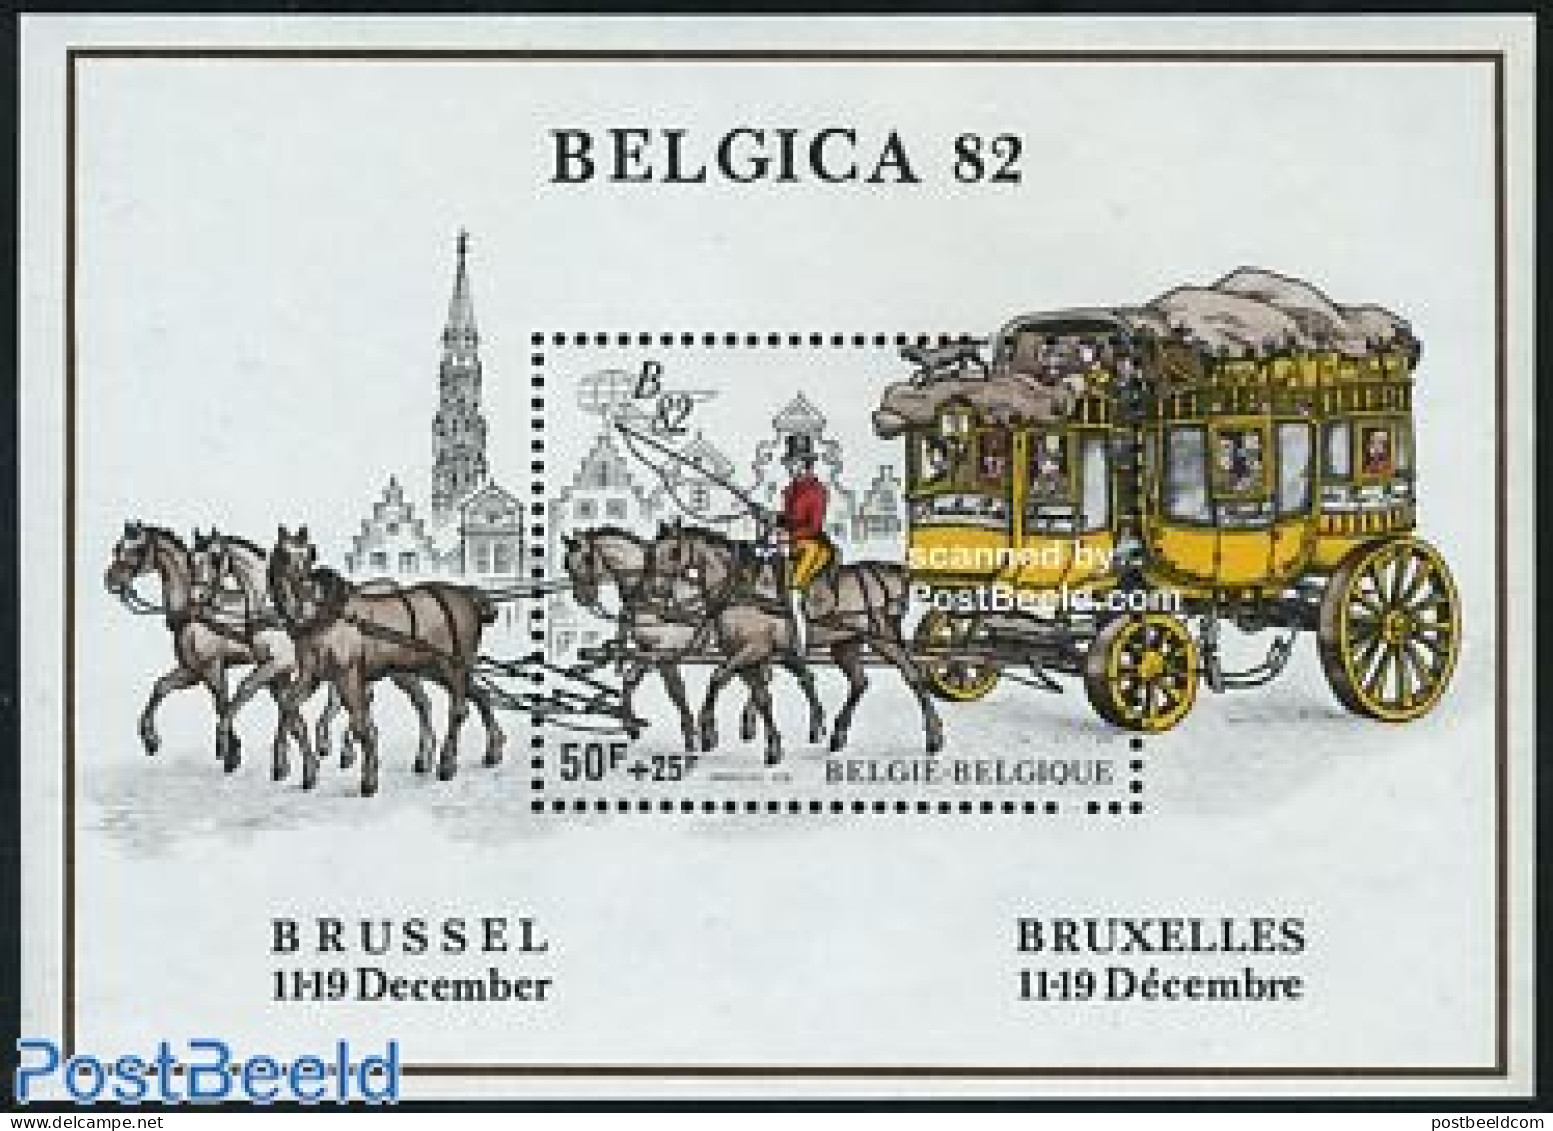 Belgium 1982 Belgica 82 S/s, Mint NH, Nature - Transport - Dogs - Horses - Post - Coaches - Ongebruikt